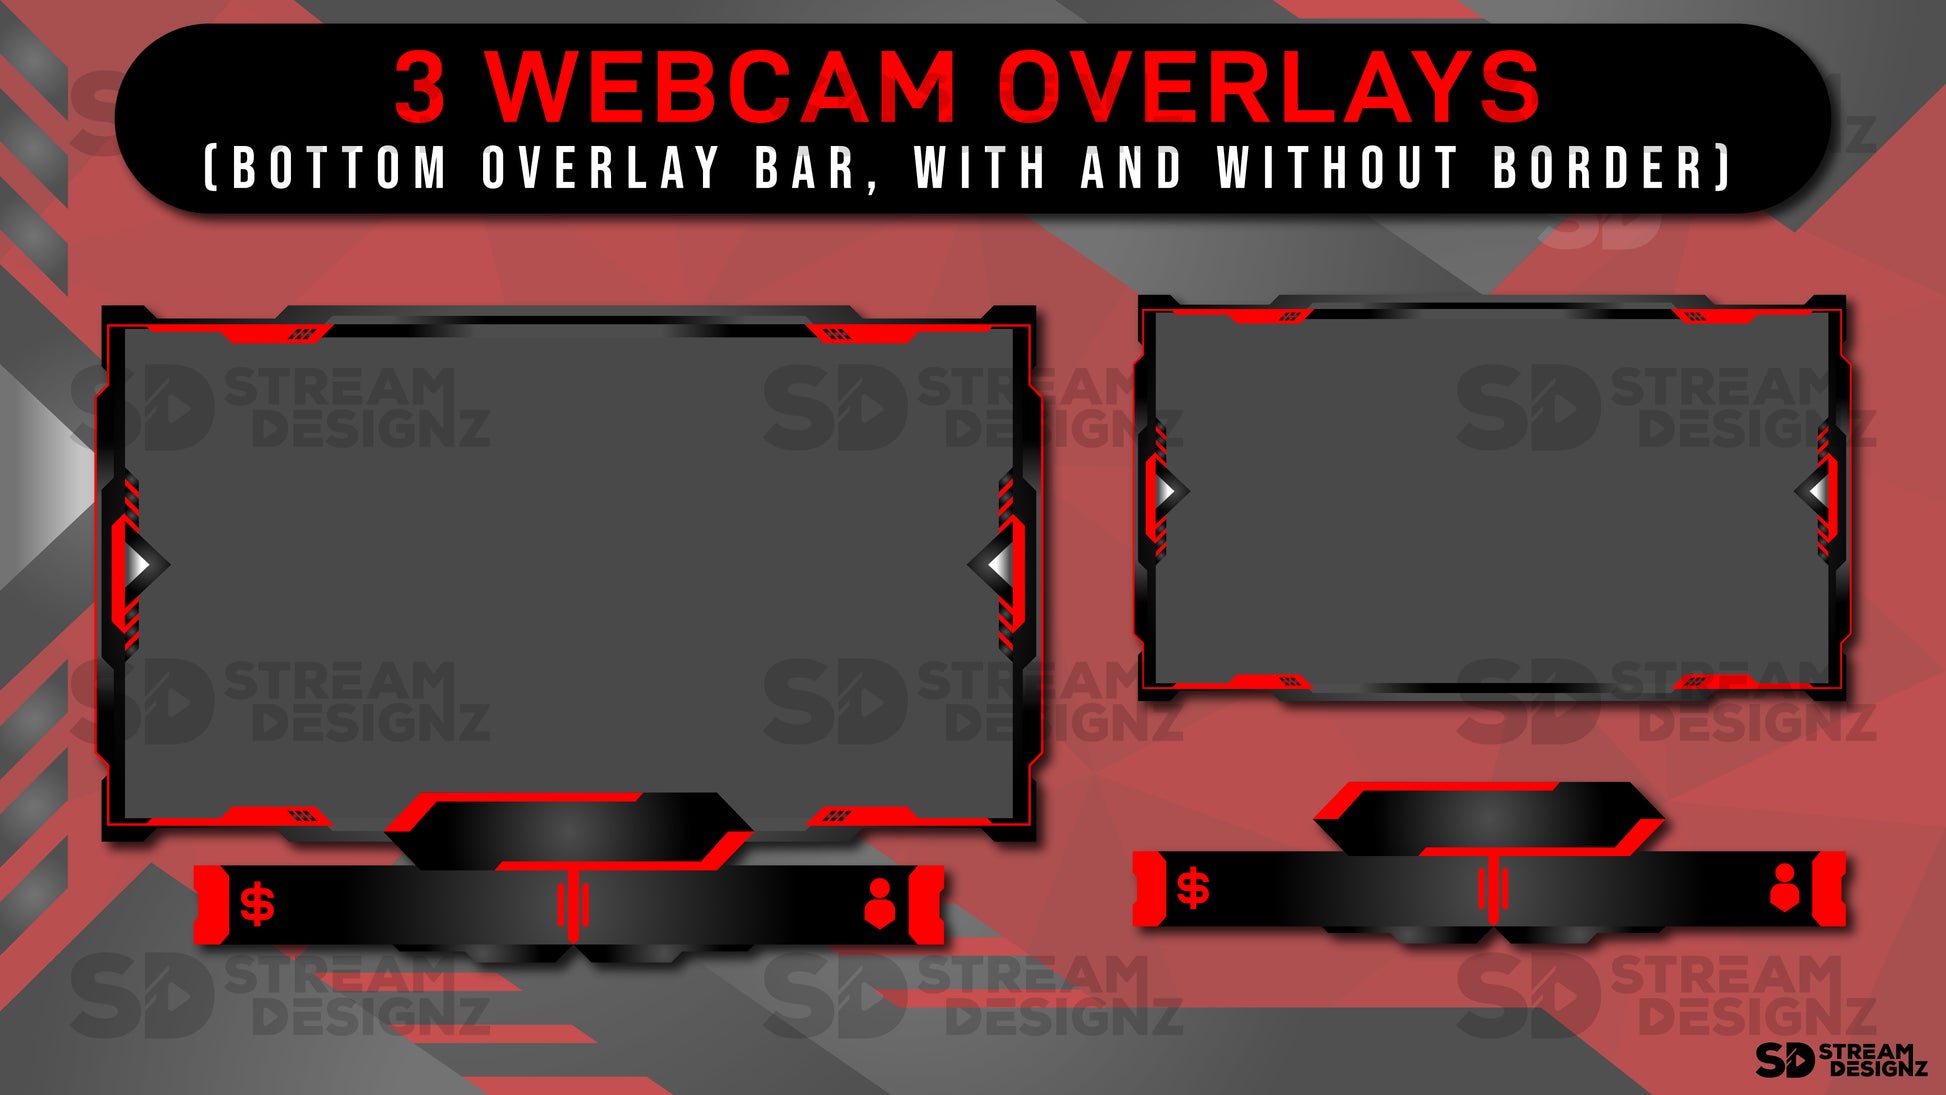 Static stream overlay package velocity 3 webcam overlays stream designz